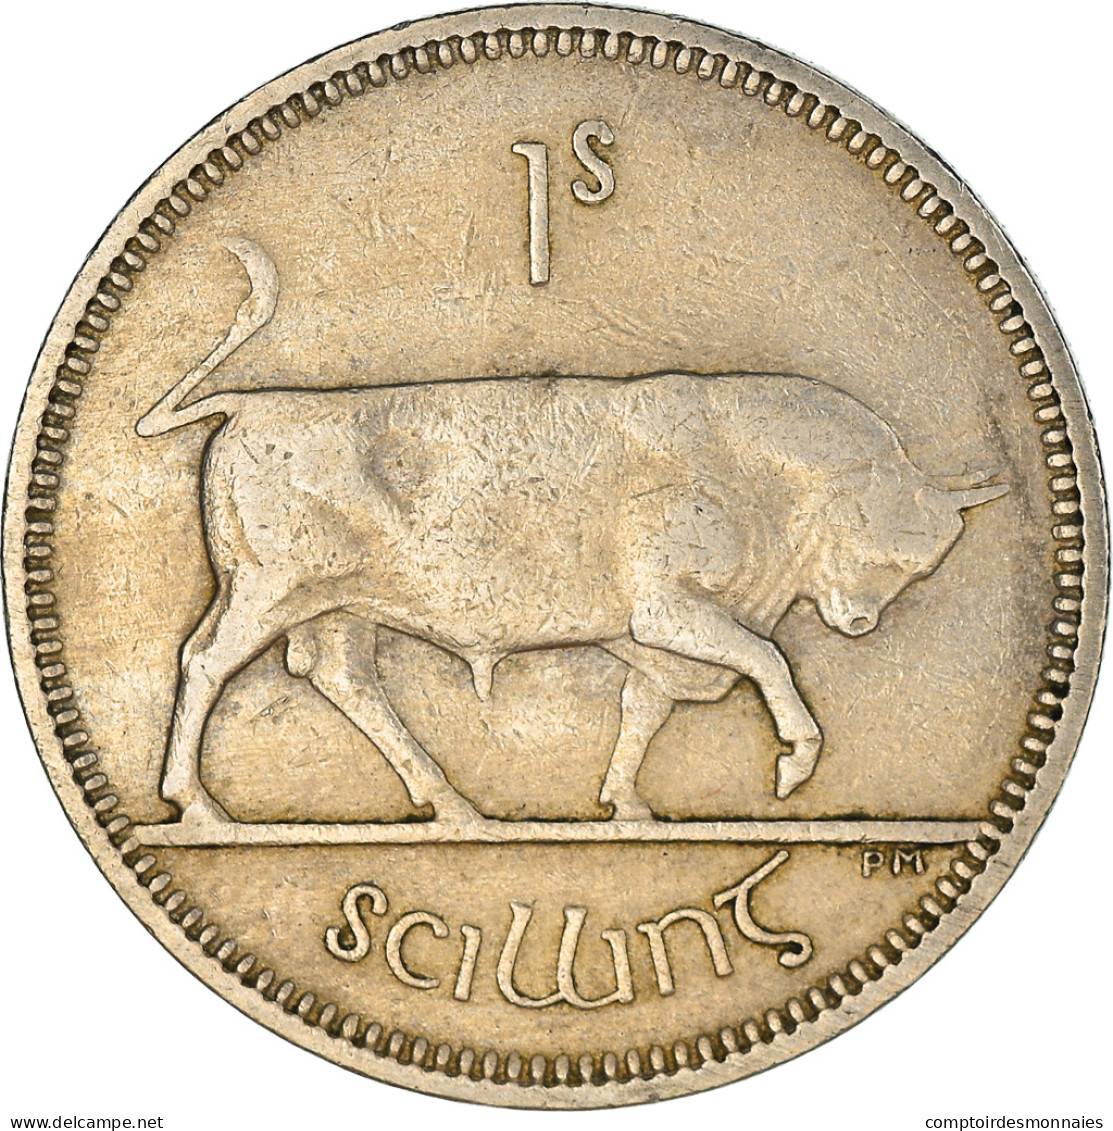 Monnaie, IRELAND REPUBLIC, Shilling, 1962, TTB, Cupro-nickel, KM:14A - Ireland